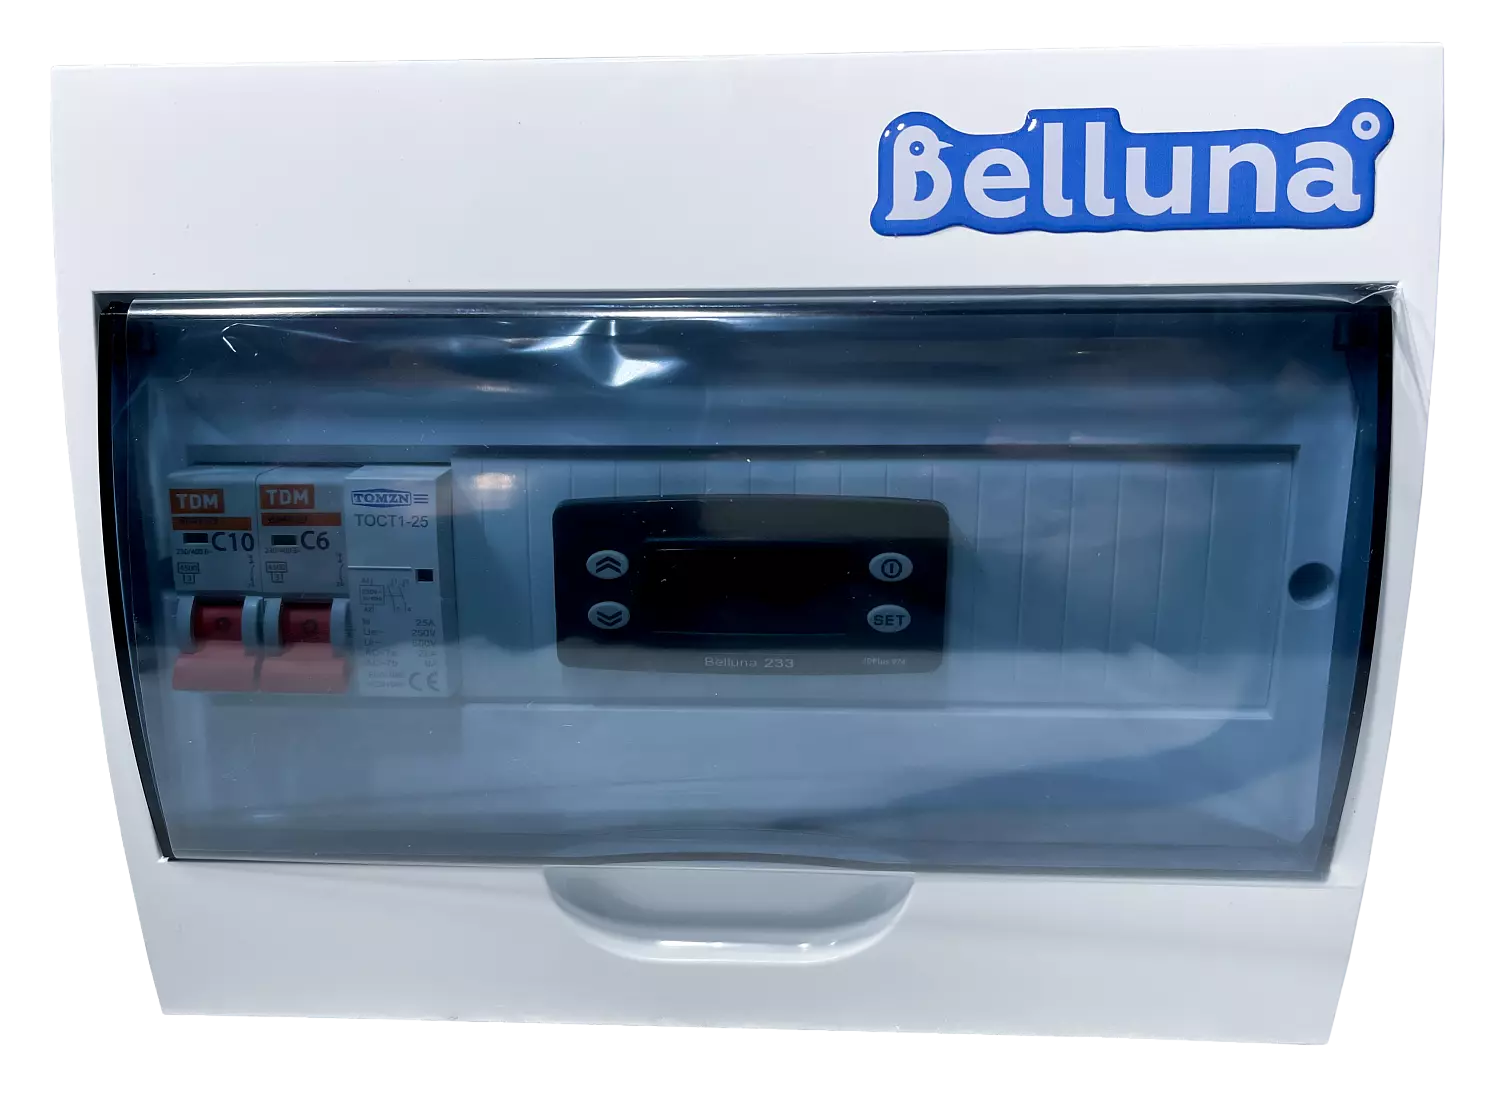 сплит-система Belluna U205 Краснодар